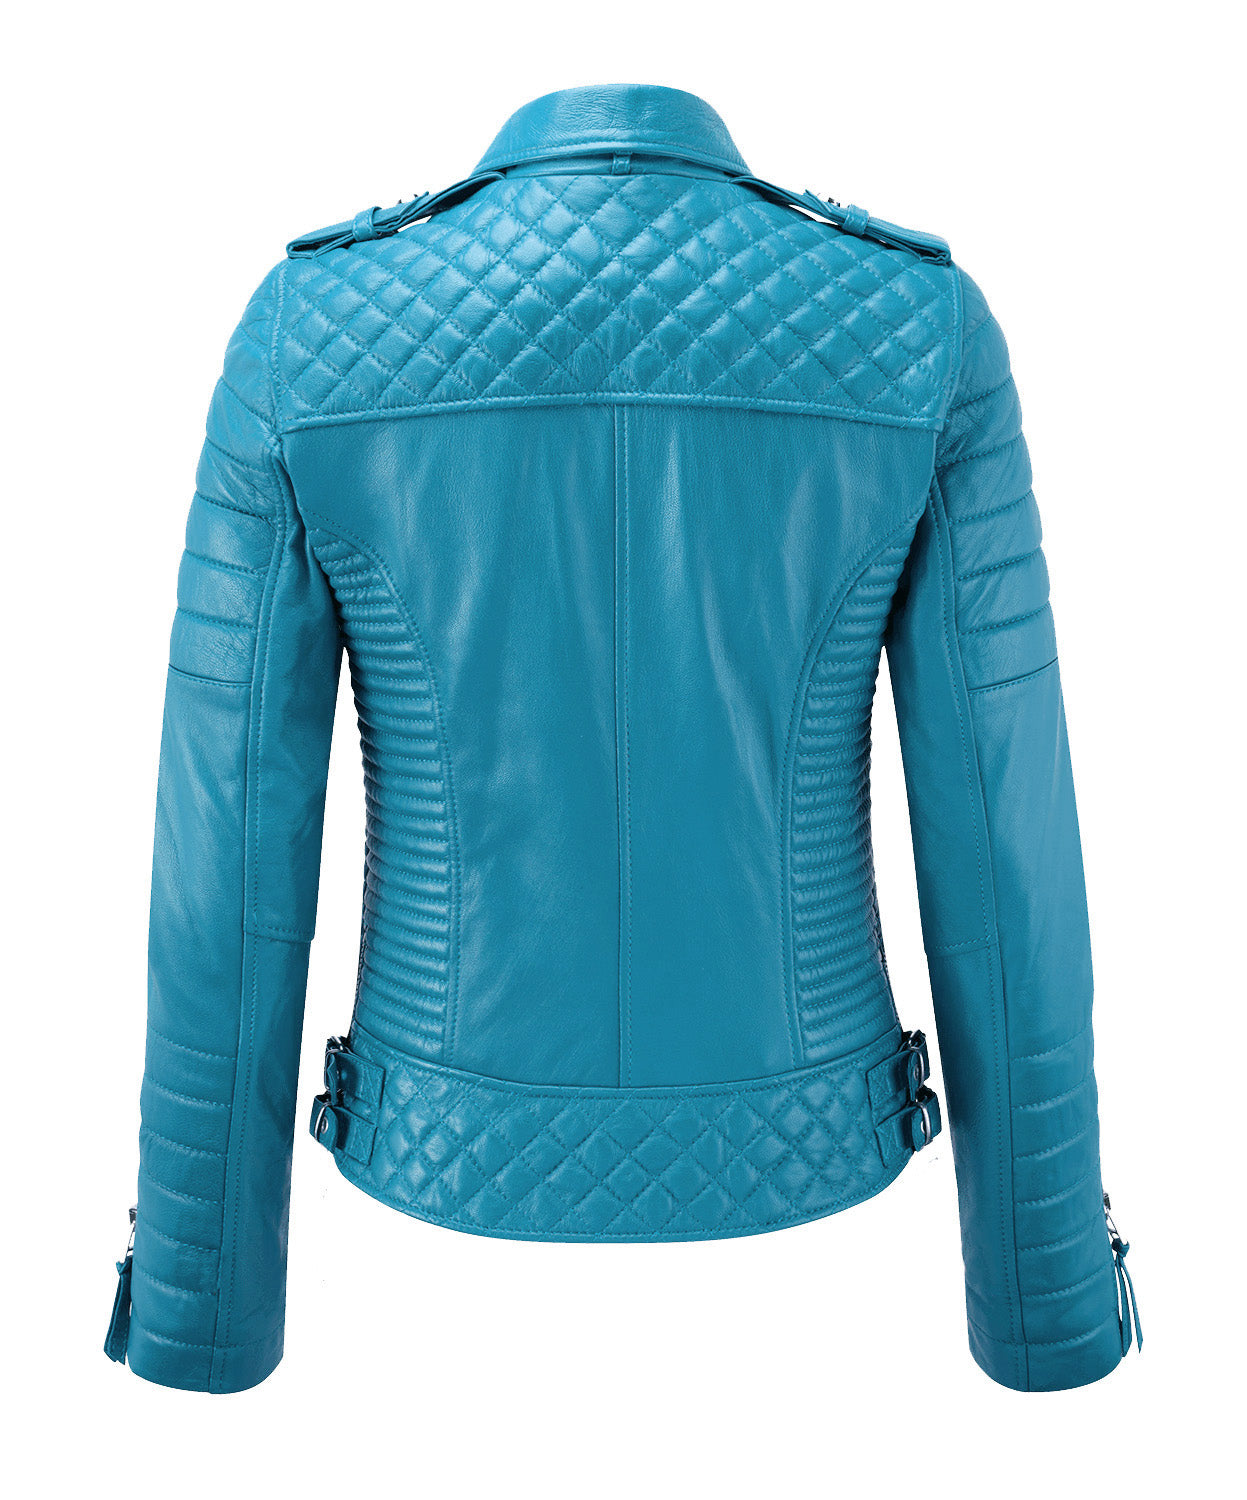 Women Biker Leather Jacket Turquoise Blue SkinOutfit